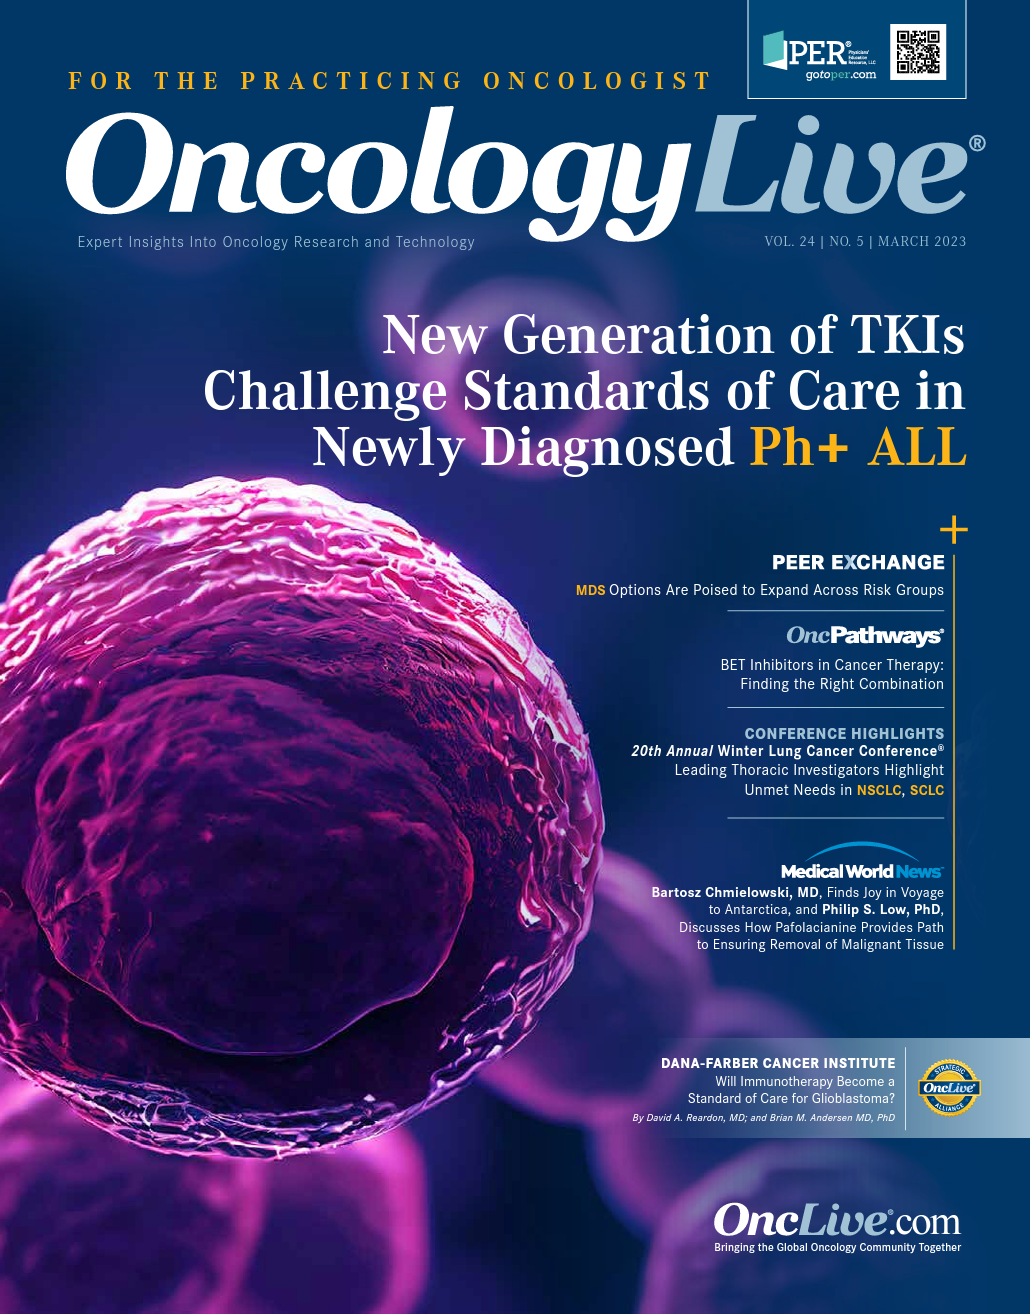 OncologyLive, Vol. 24/No. 5